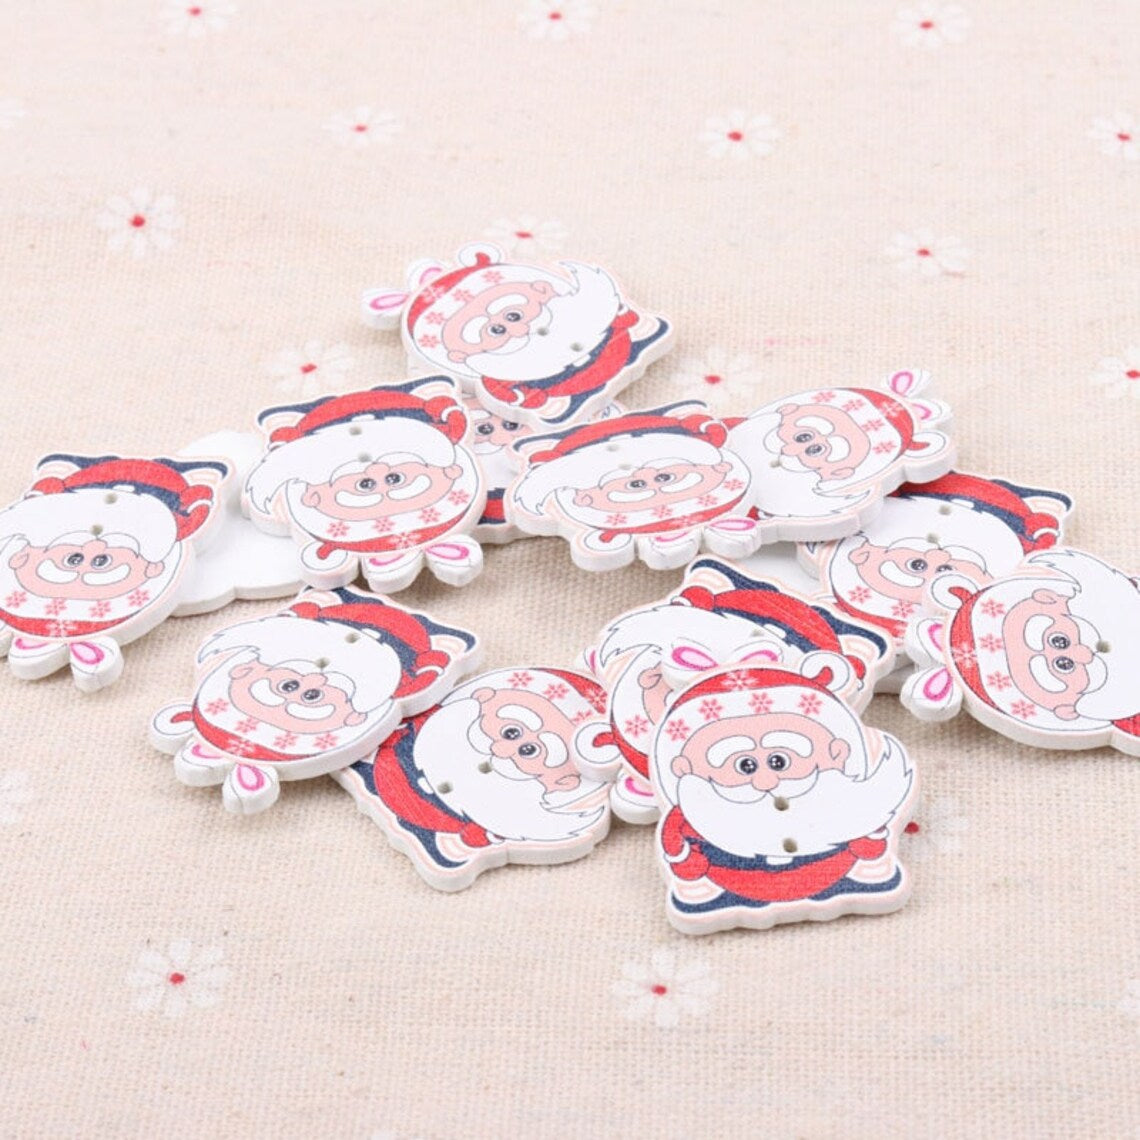 Santa Claus Wooden Buttons - Set of 6